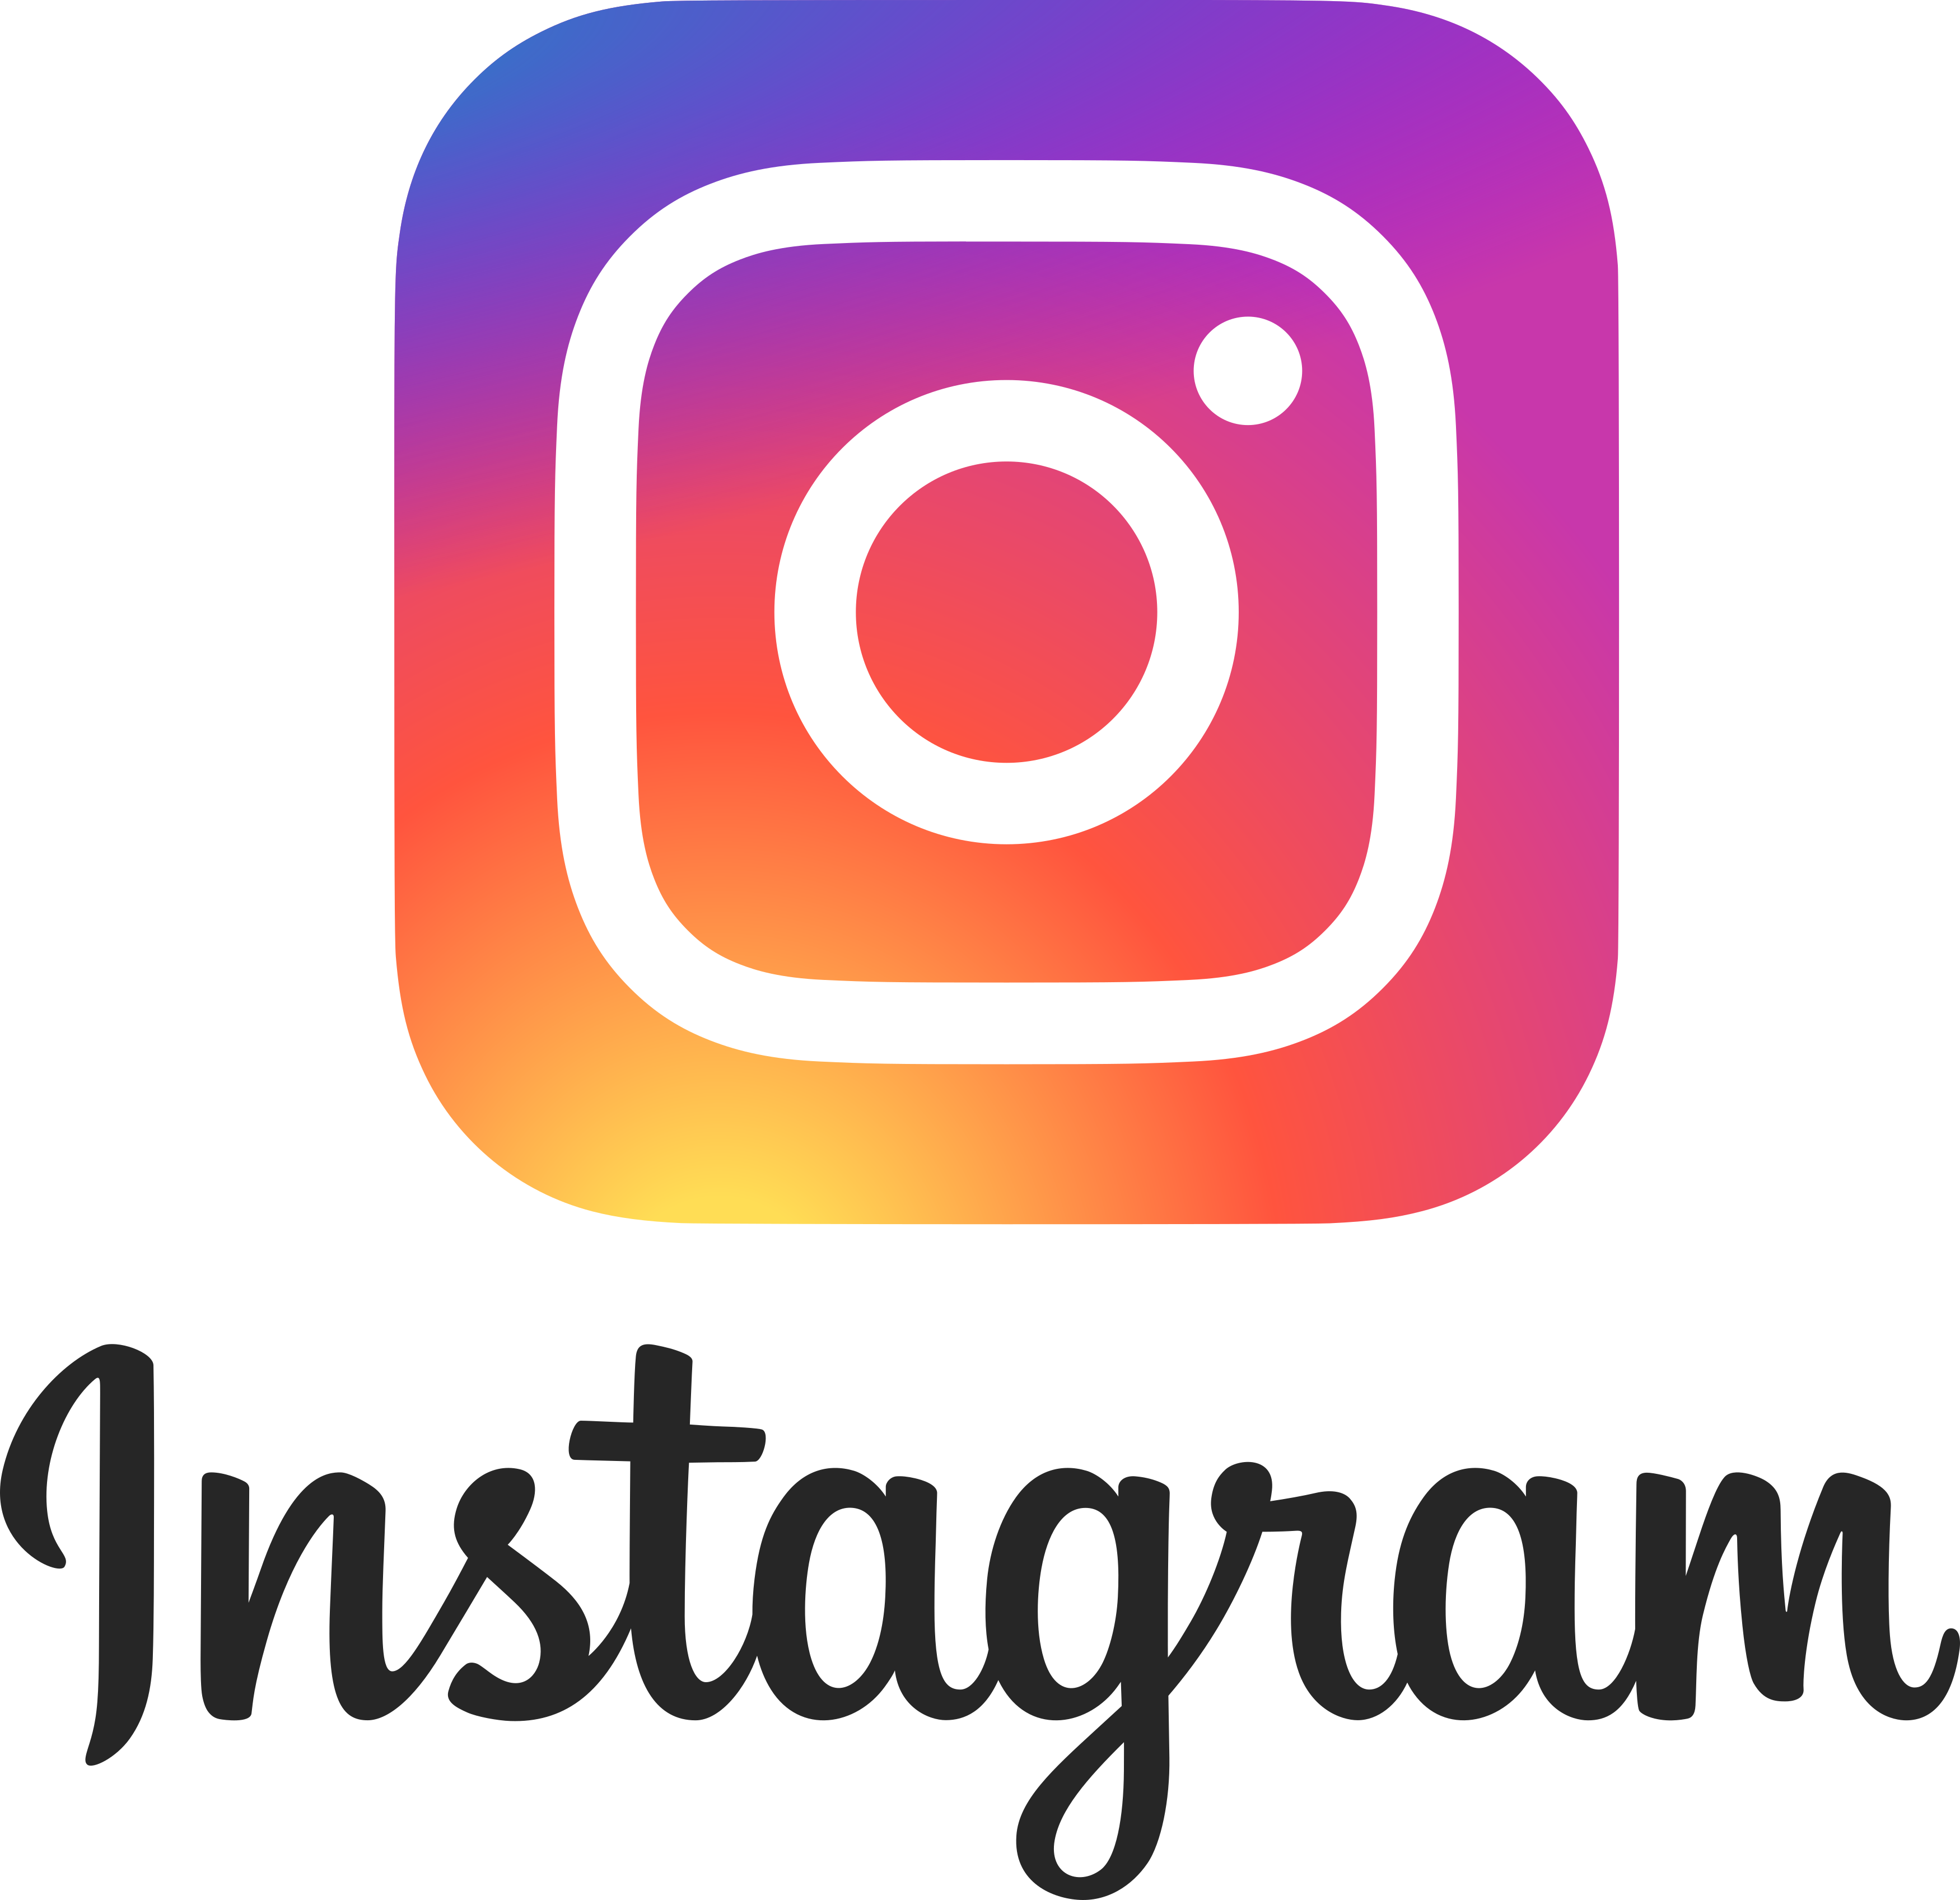 HQ Instagram PNG Transparent Instagram.PNG Images.  PlusPNG